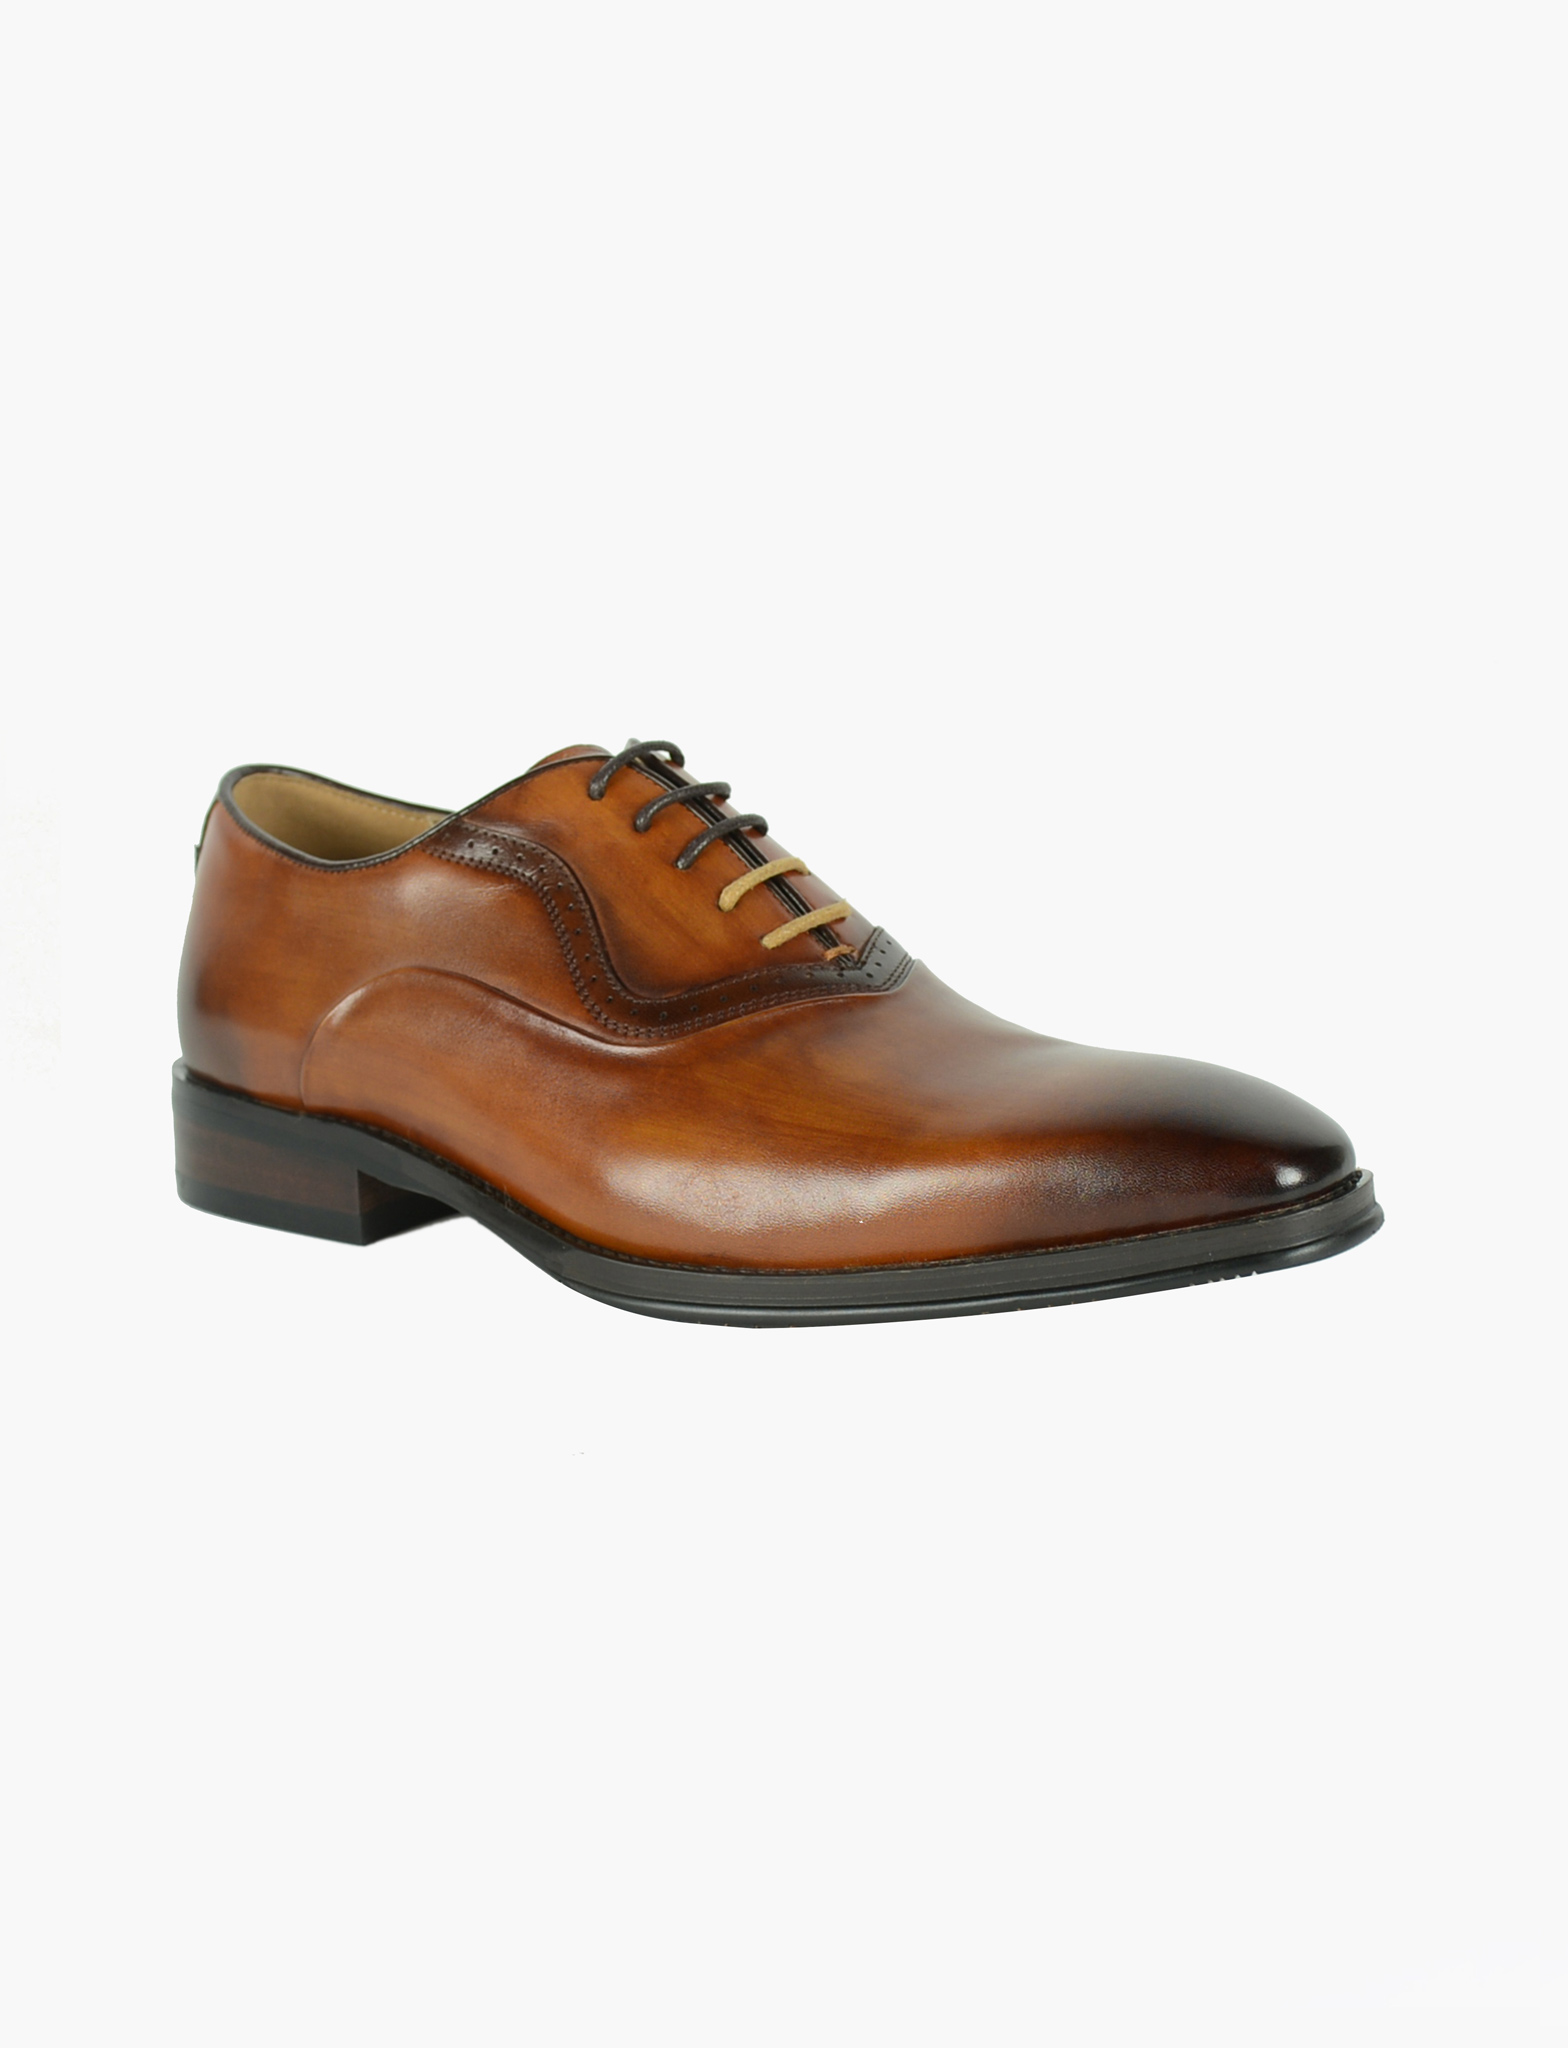 Geneva-Tan Oxford Shoes - Formal Tailor